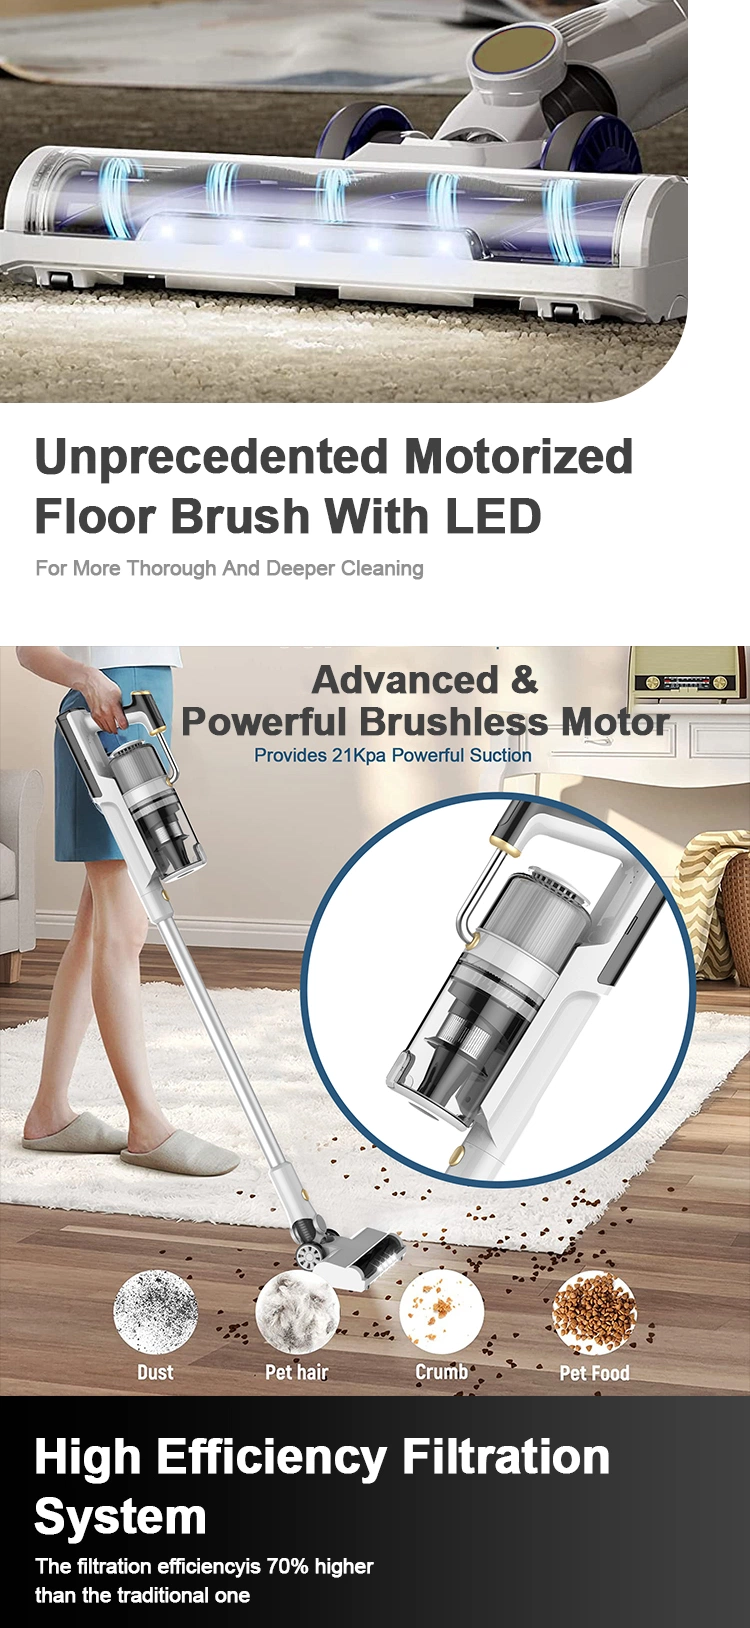 250W Large Suction Handy Home Cordless Stick Vacuum Cleaner Handheld Aspiradora Vacuum Cleaner for Carpet